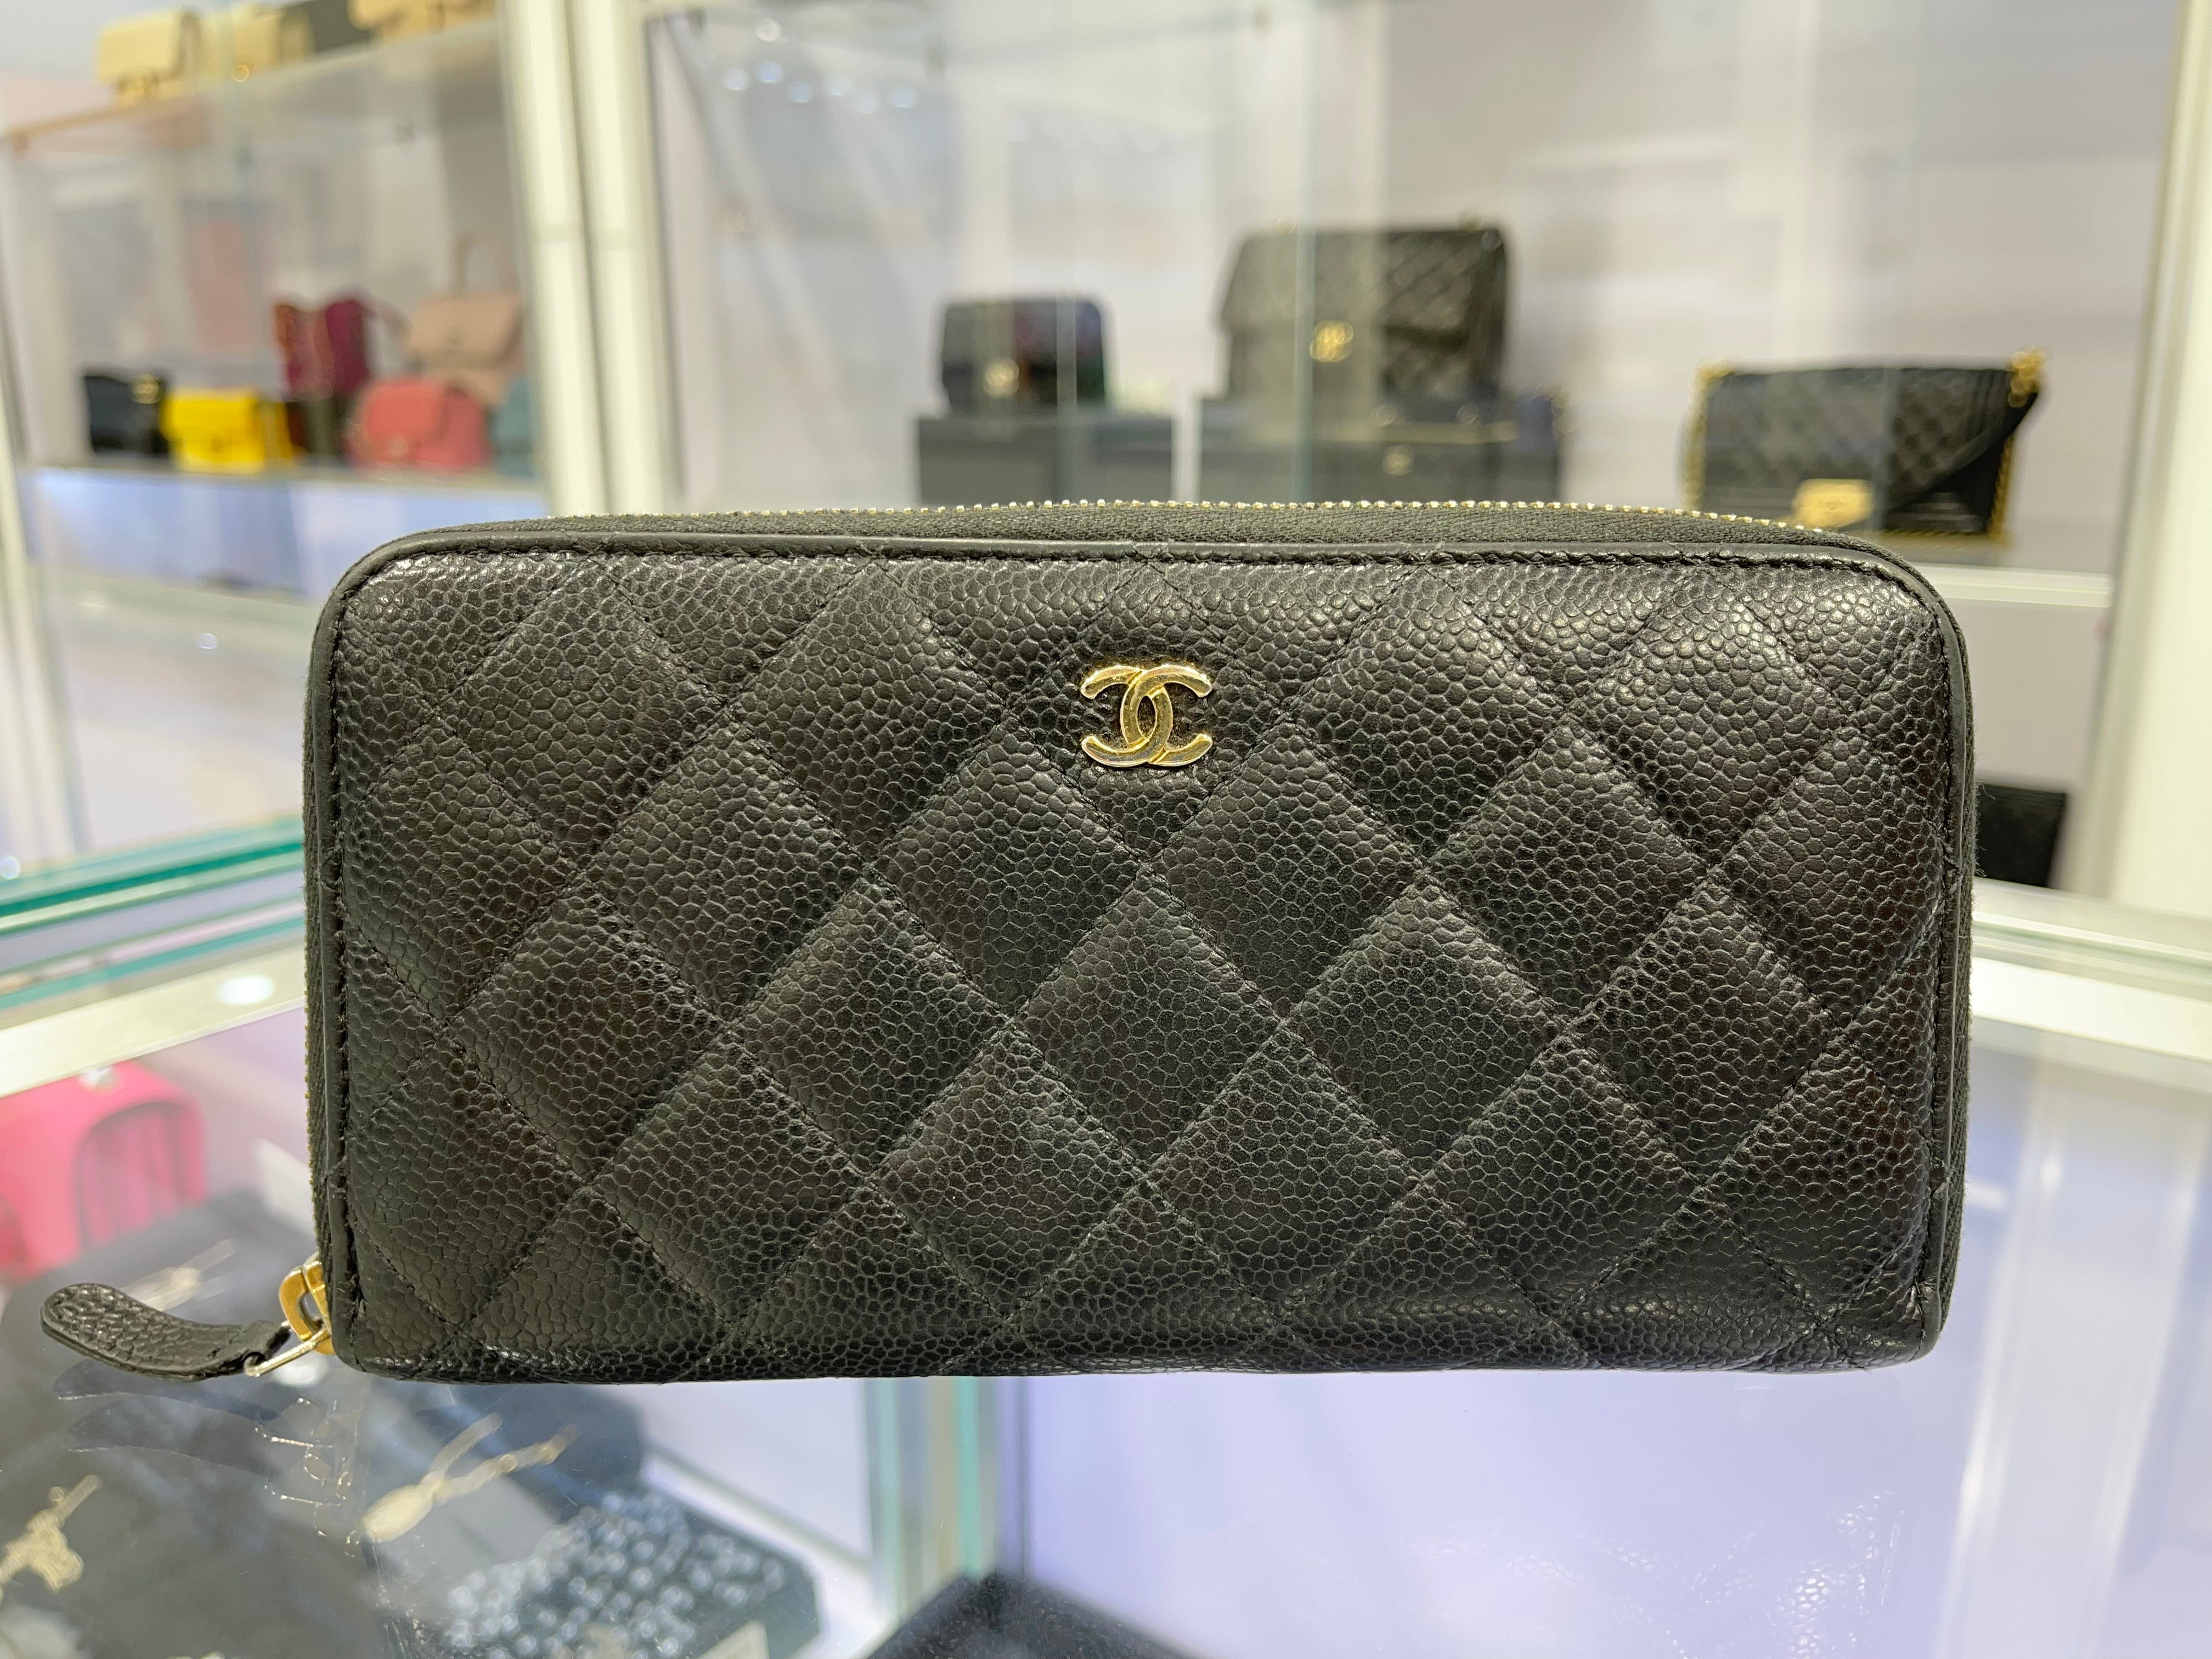 Chanel Zip around wallet